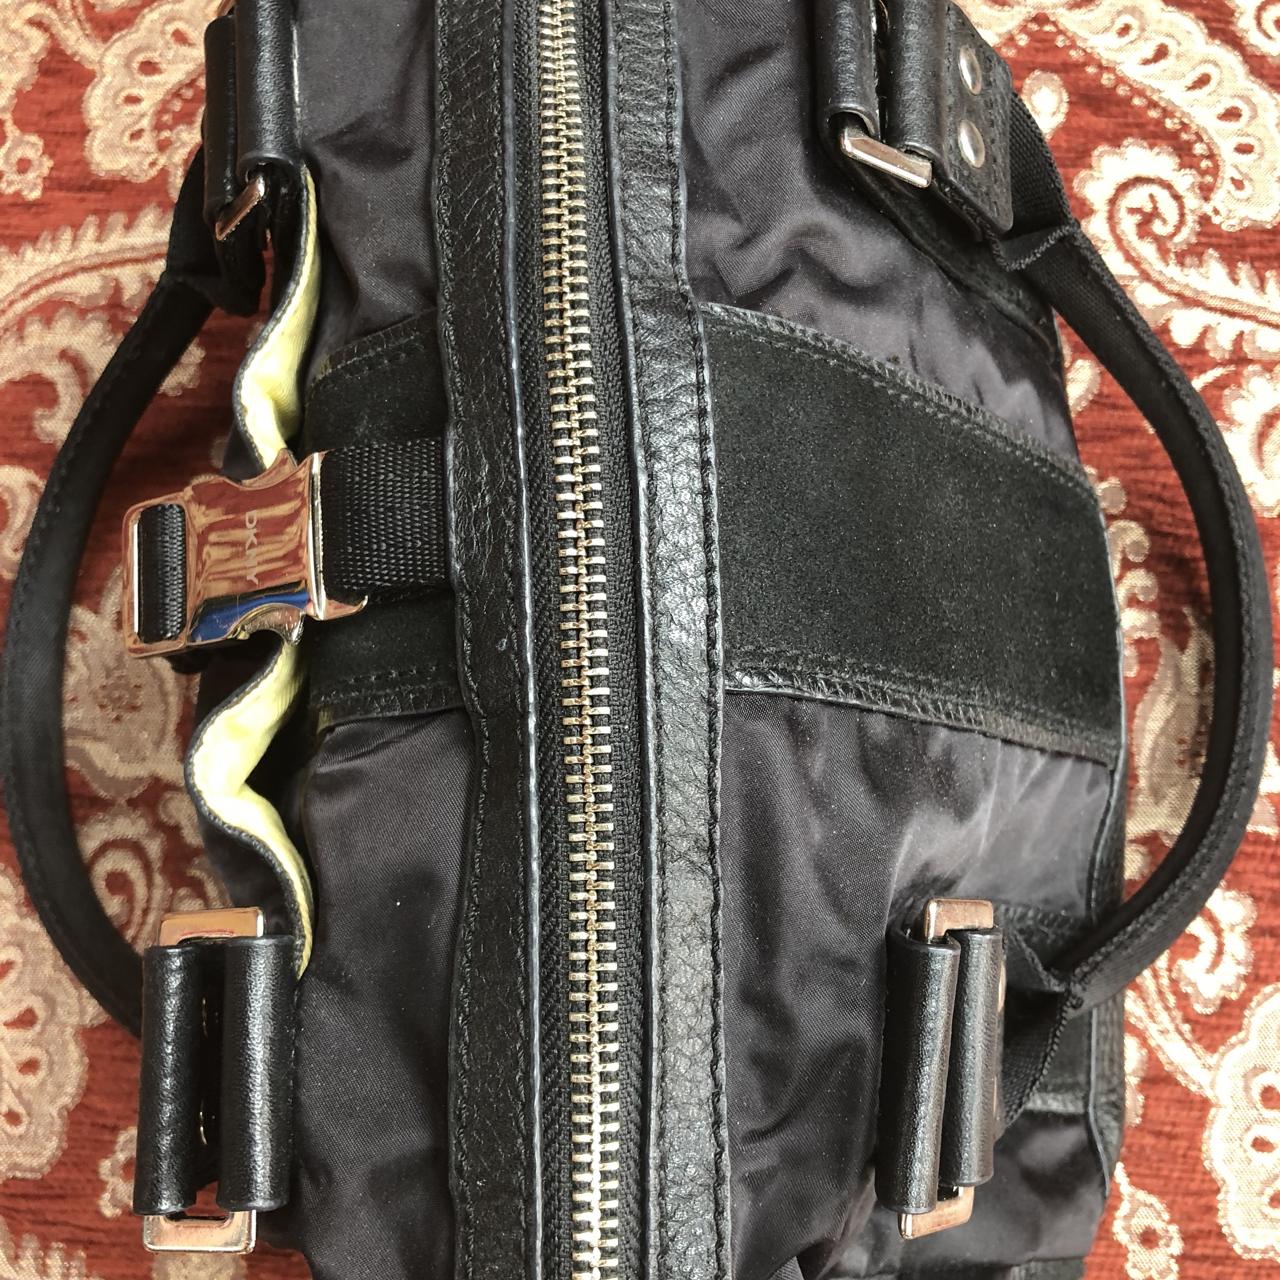 DKNY bryant park bag, black saffiano leather. This - Depop